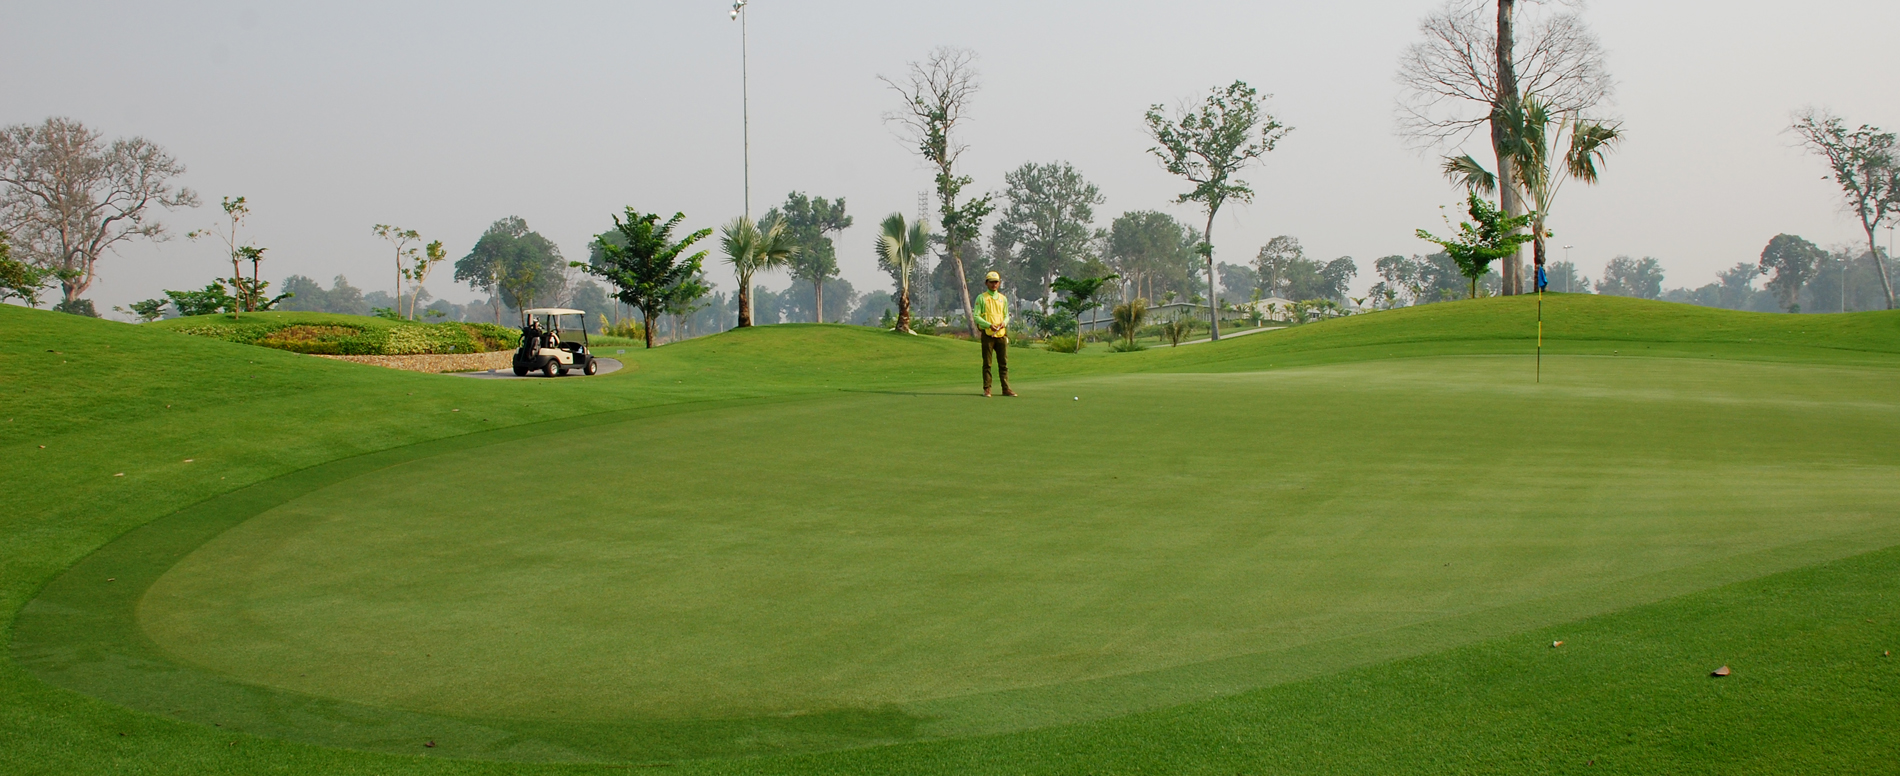 long vien golf club in laos